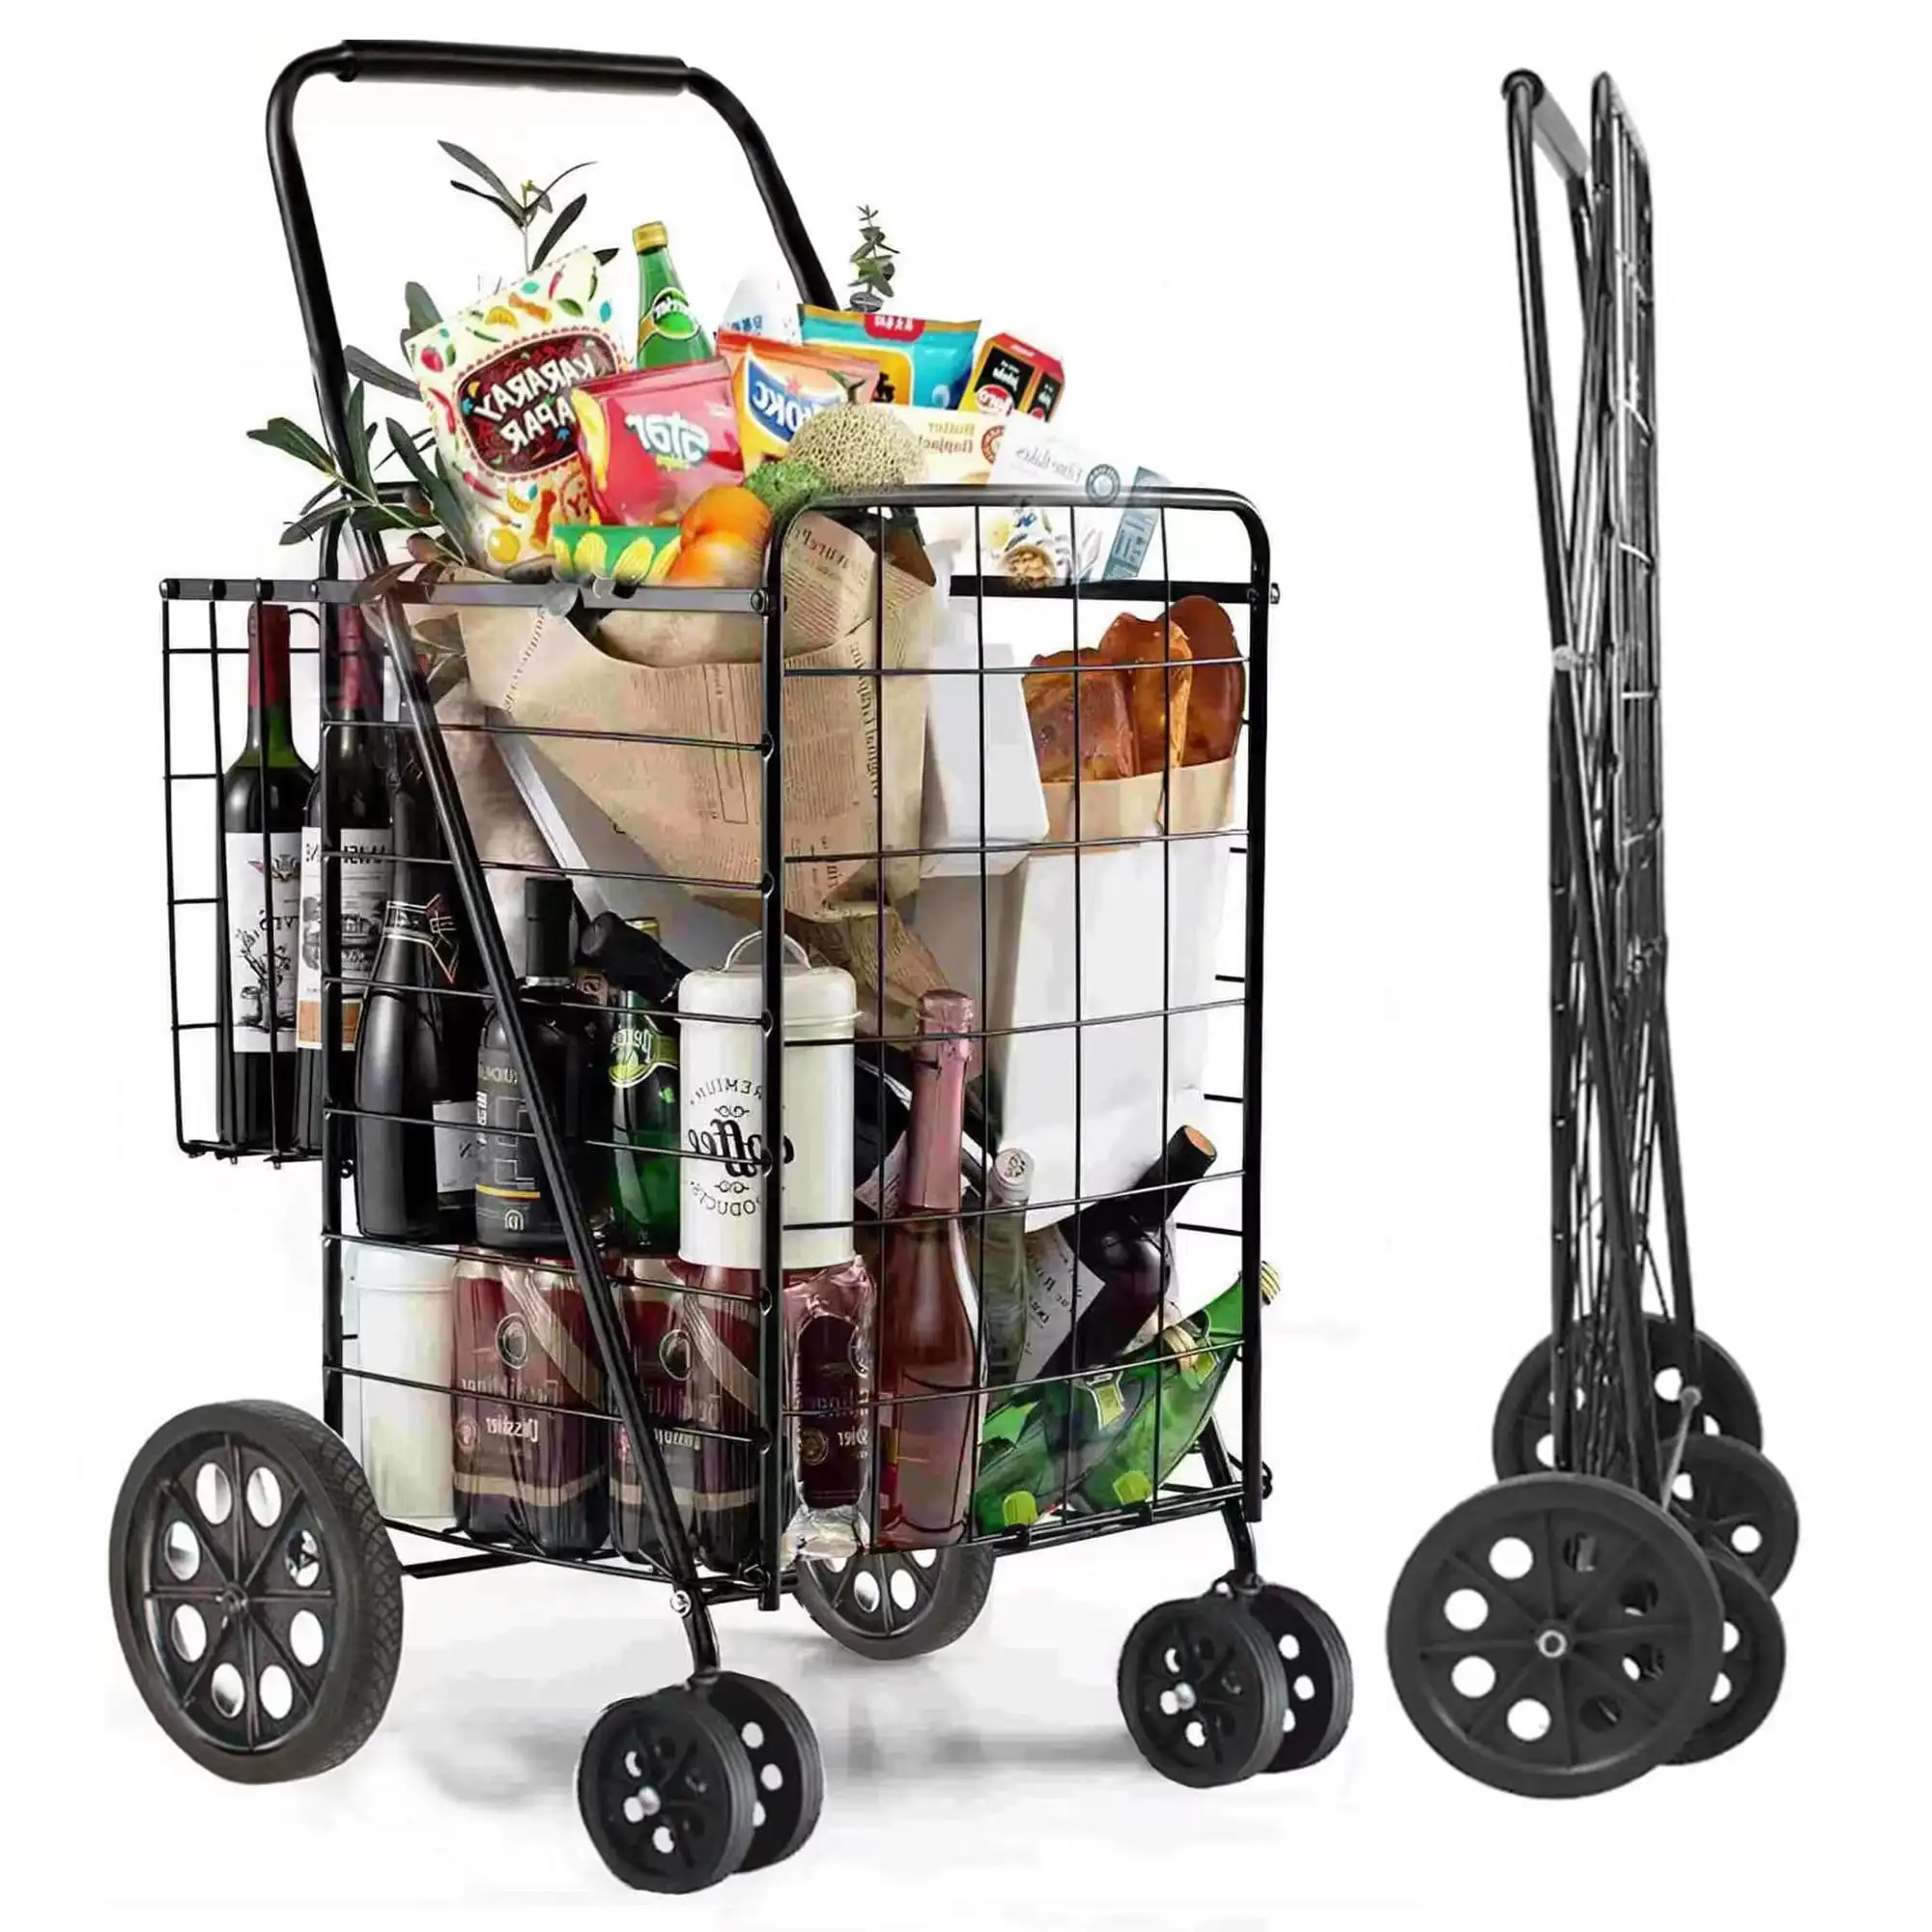 

Folding Shopping Cart 100 lbs Utility Trolley Jumbo Basket with Swivel Wheels, Black